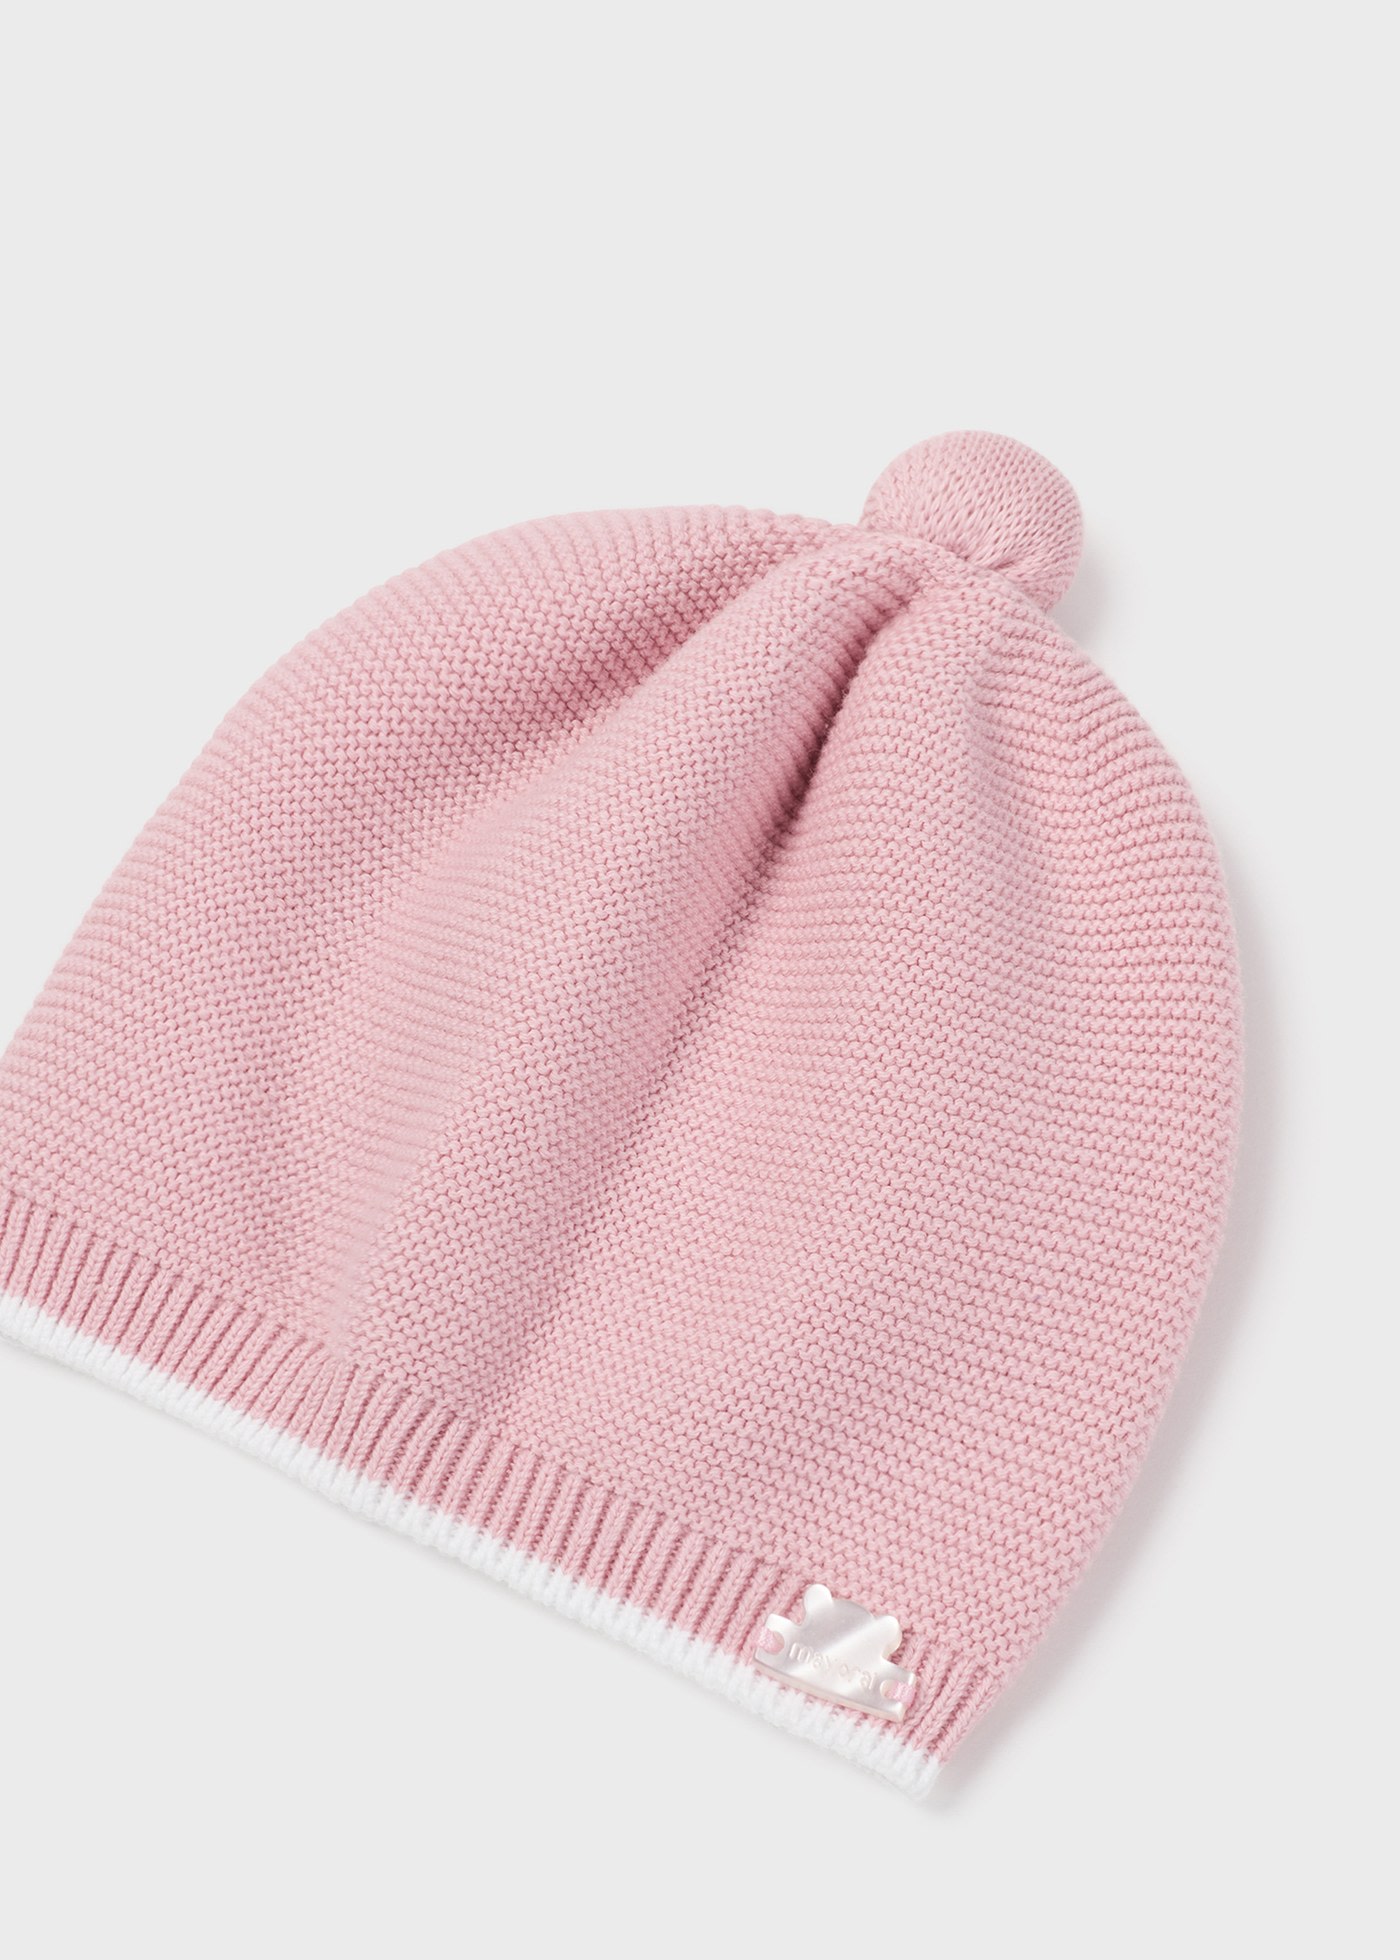 Sustainable cotton knit hat newborn